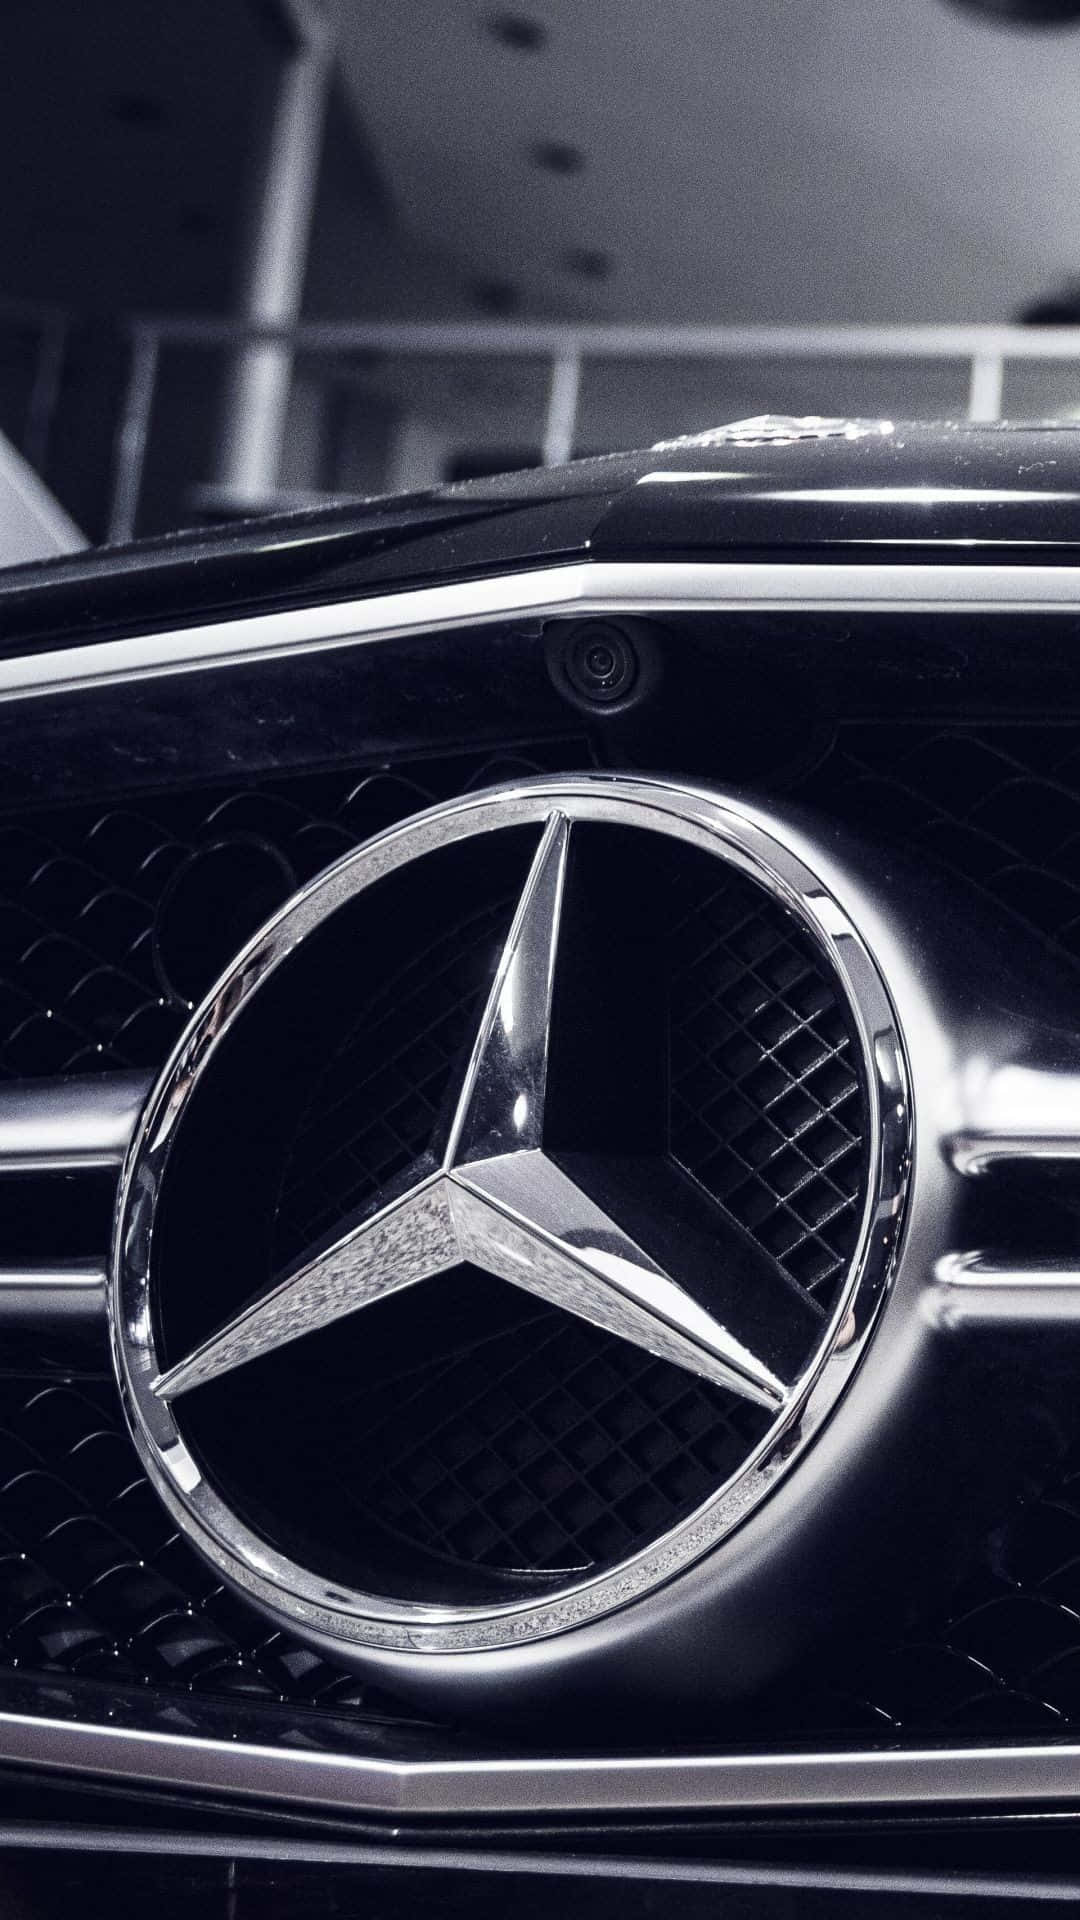 Bästamercedes Bakgrundsbild Med Logotypen Mercedes-benz S-klass.